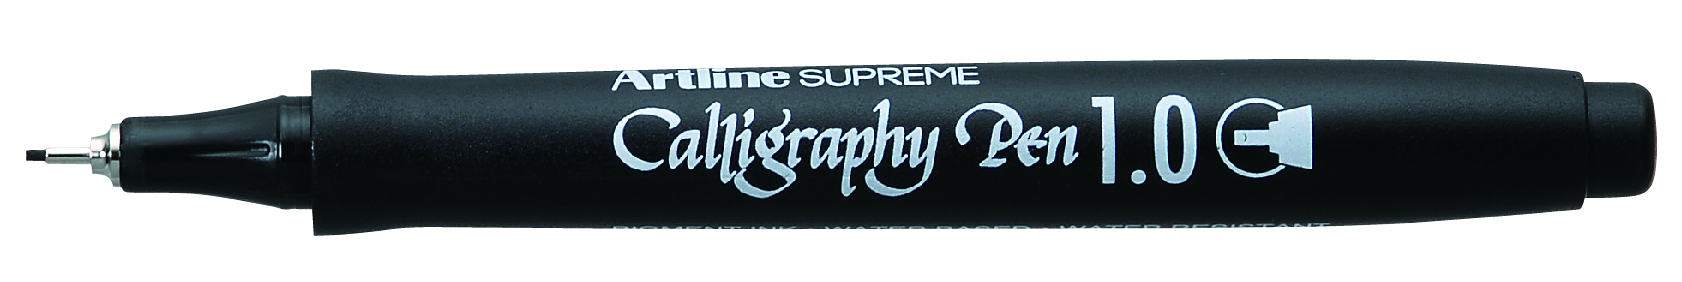 Artline Supreme Calligraphy Pen 1mm sort